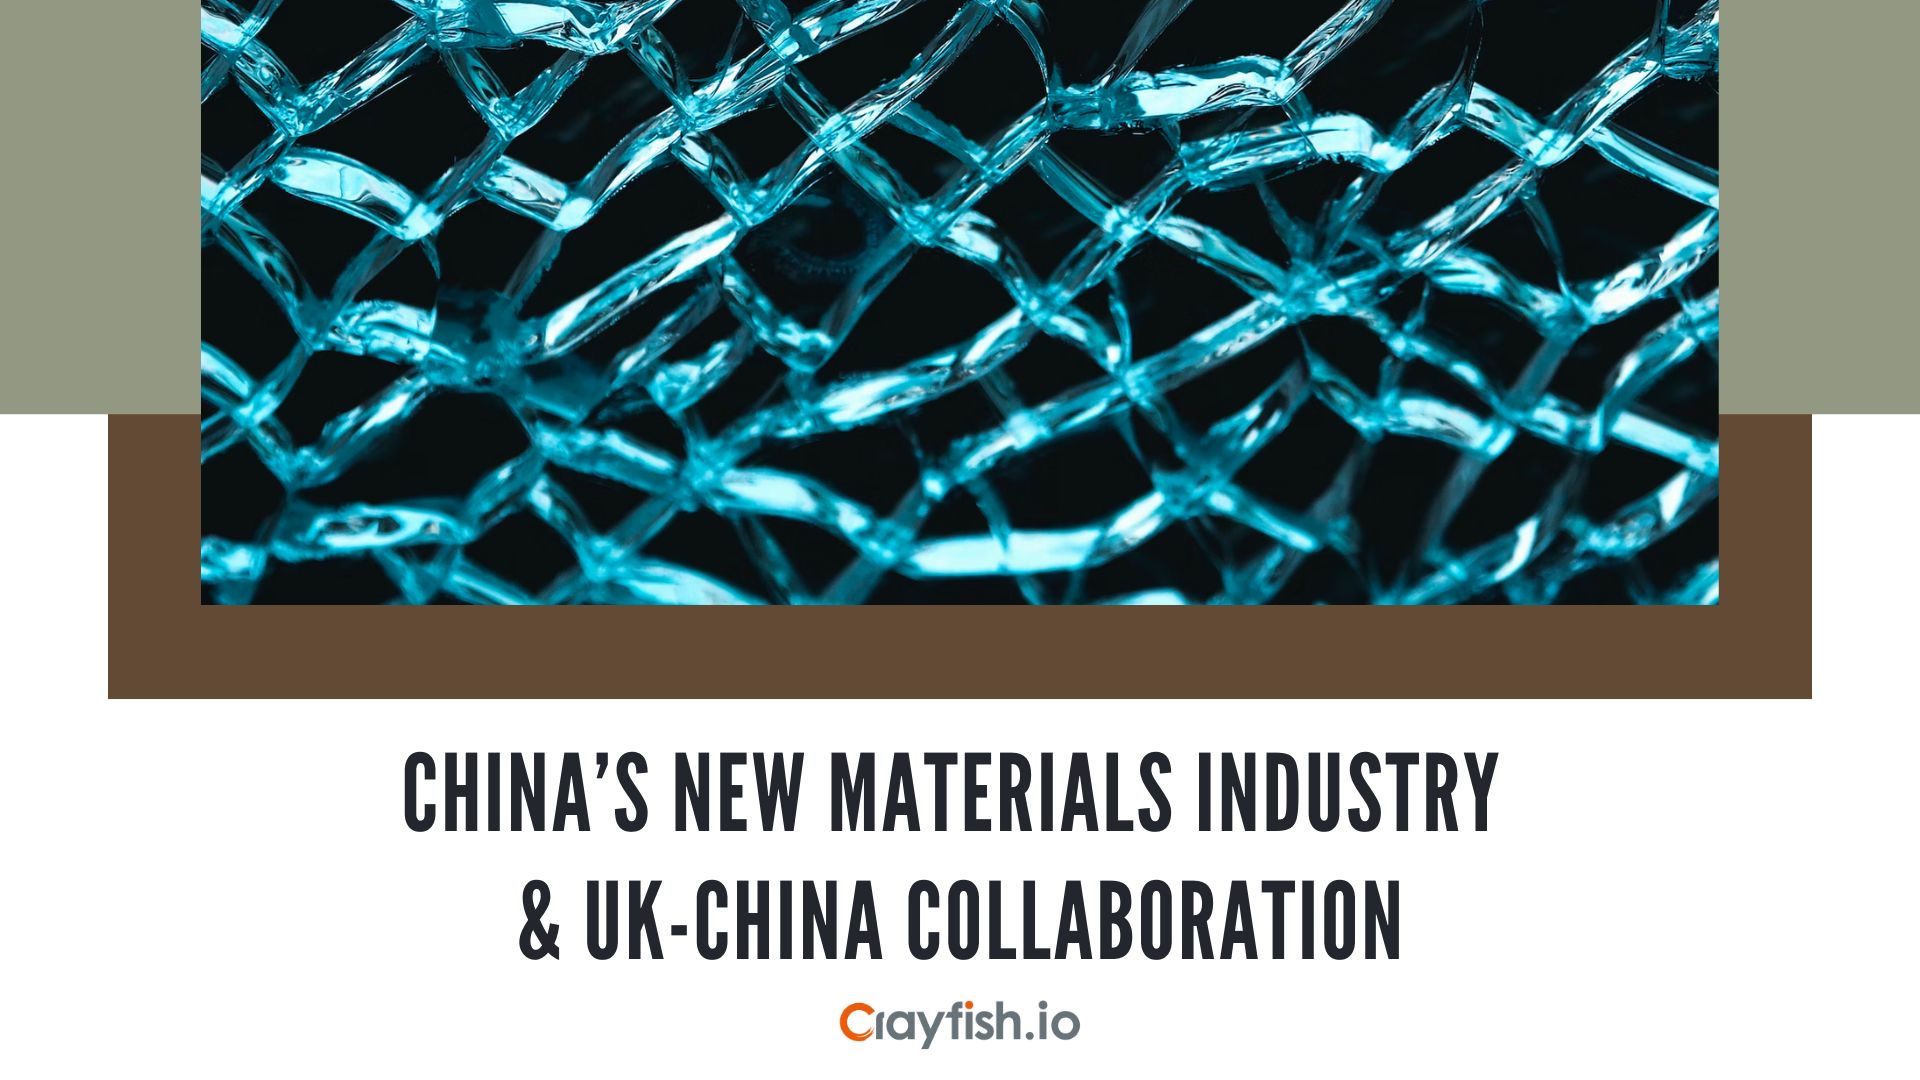 China’s new materials industry & UK-China collaboration